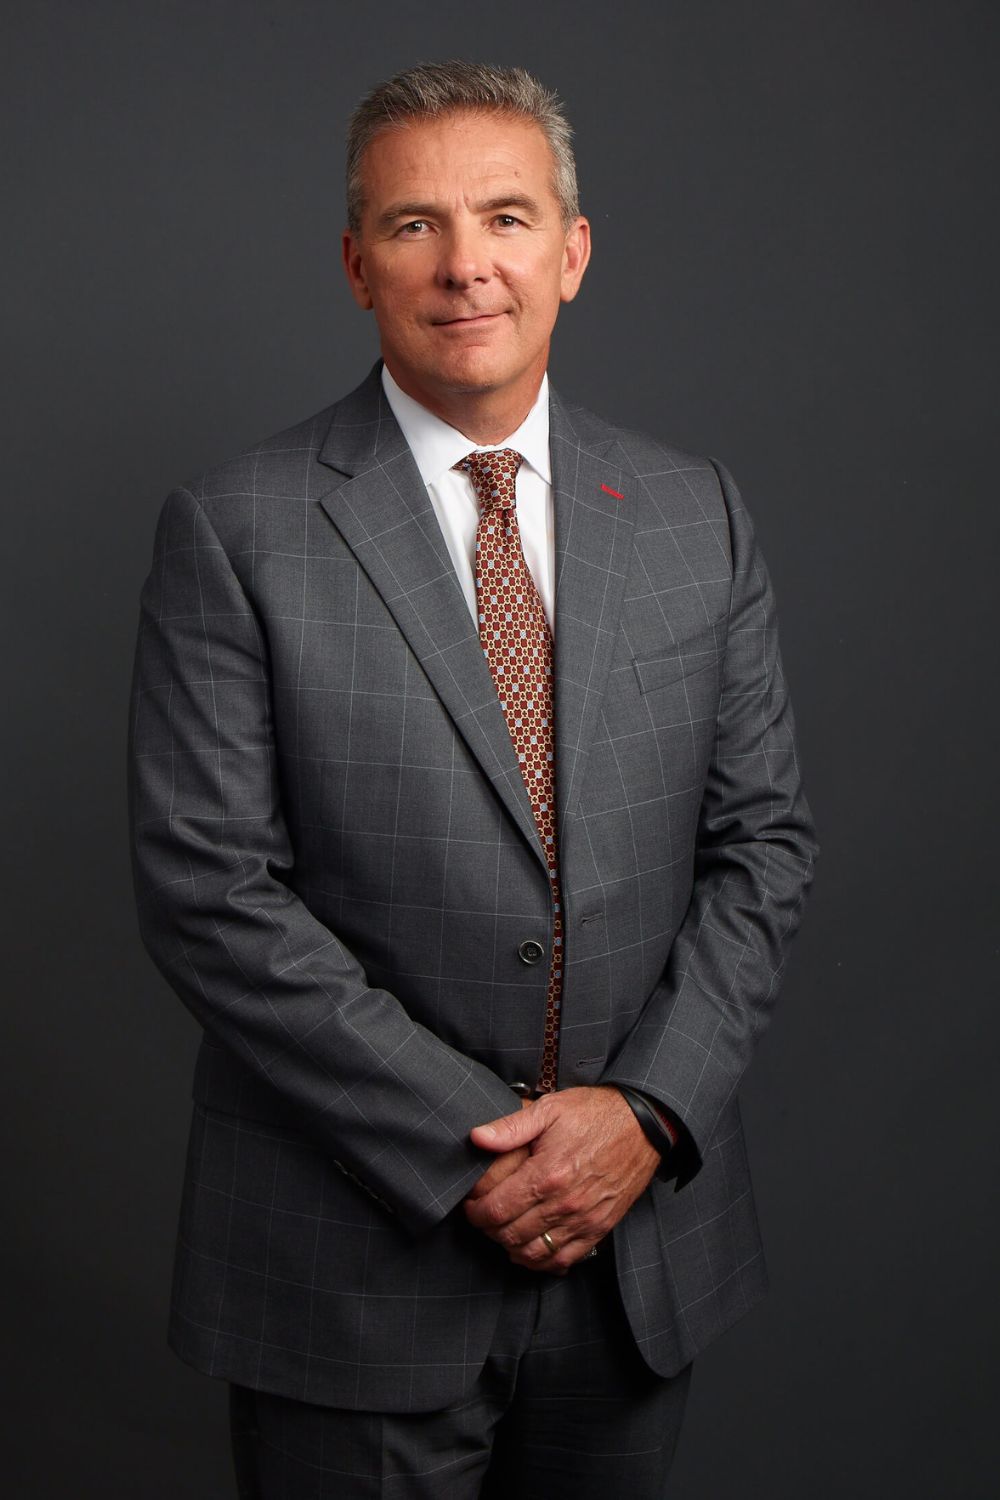 Urban Meyer Joined Fox Sports In 2019